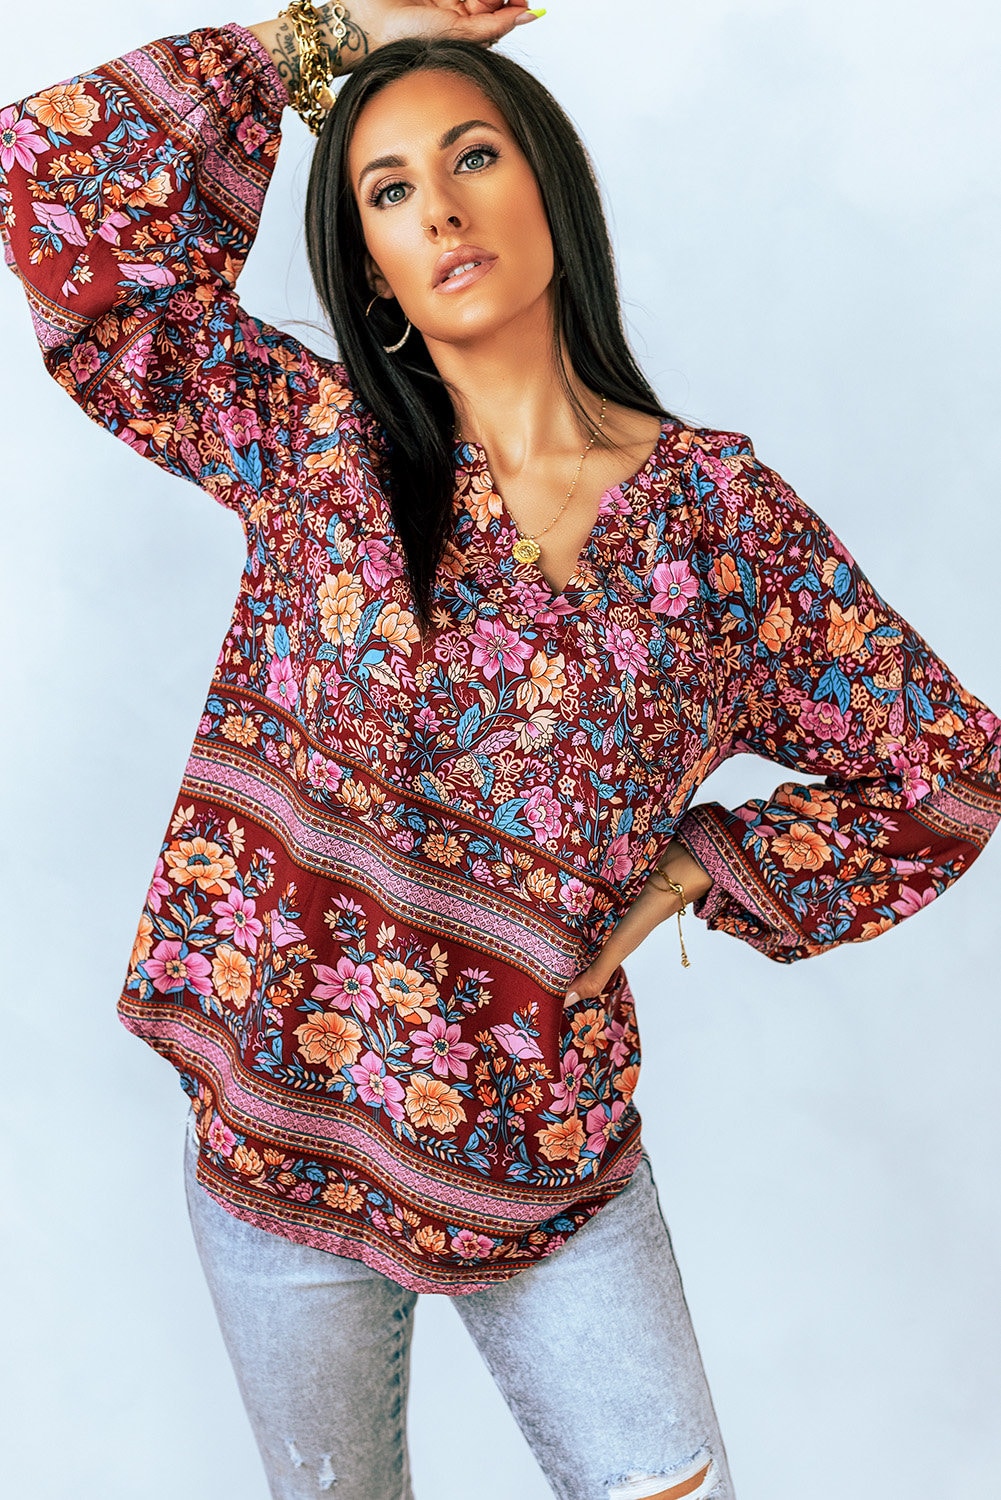 Bohemian Floral Print Long Sleeve Top - Autumn Blossom Boho Shirt for Women - Summer Blouse - Fall Boho Top